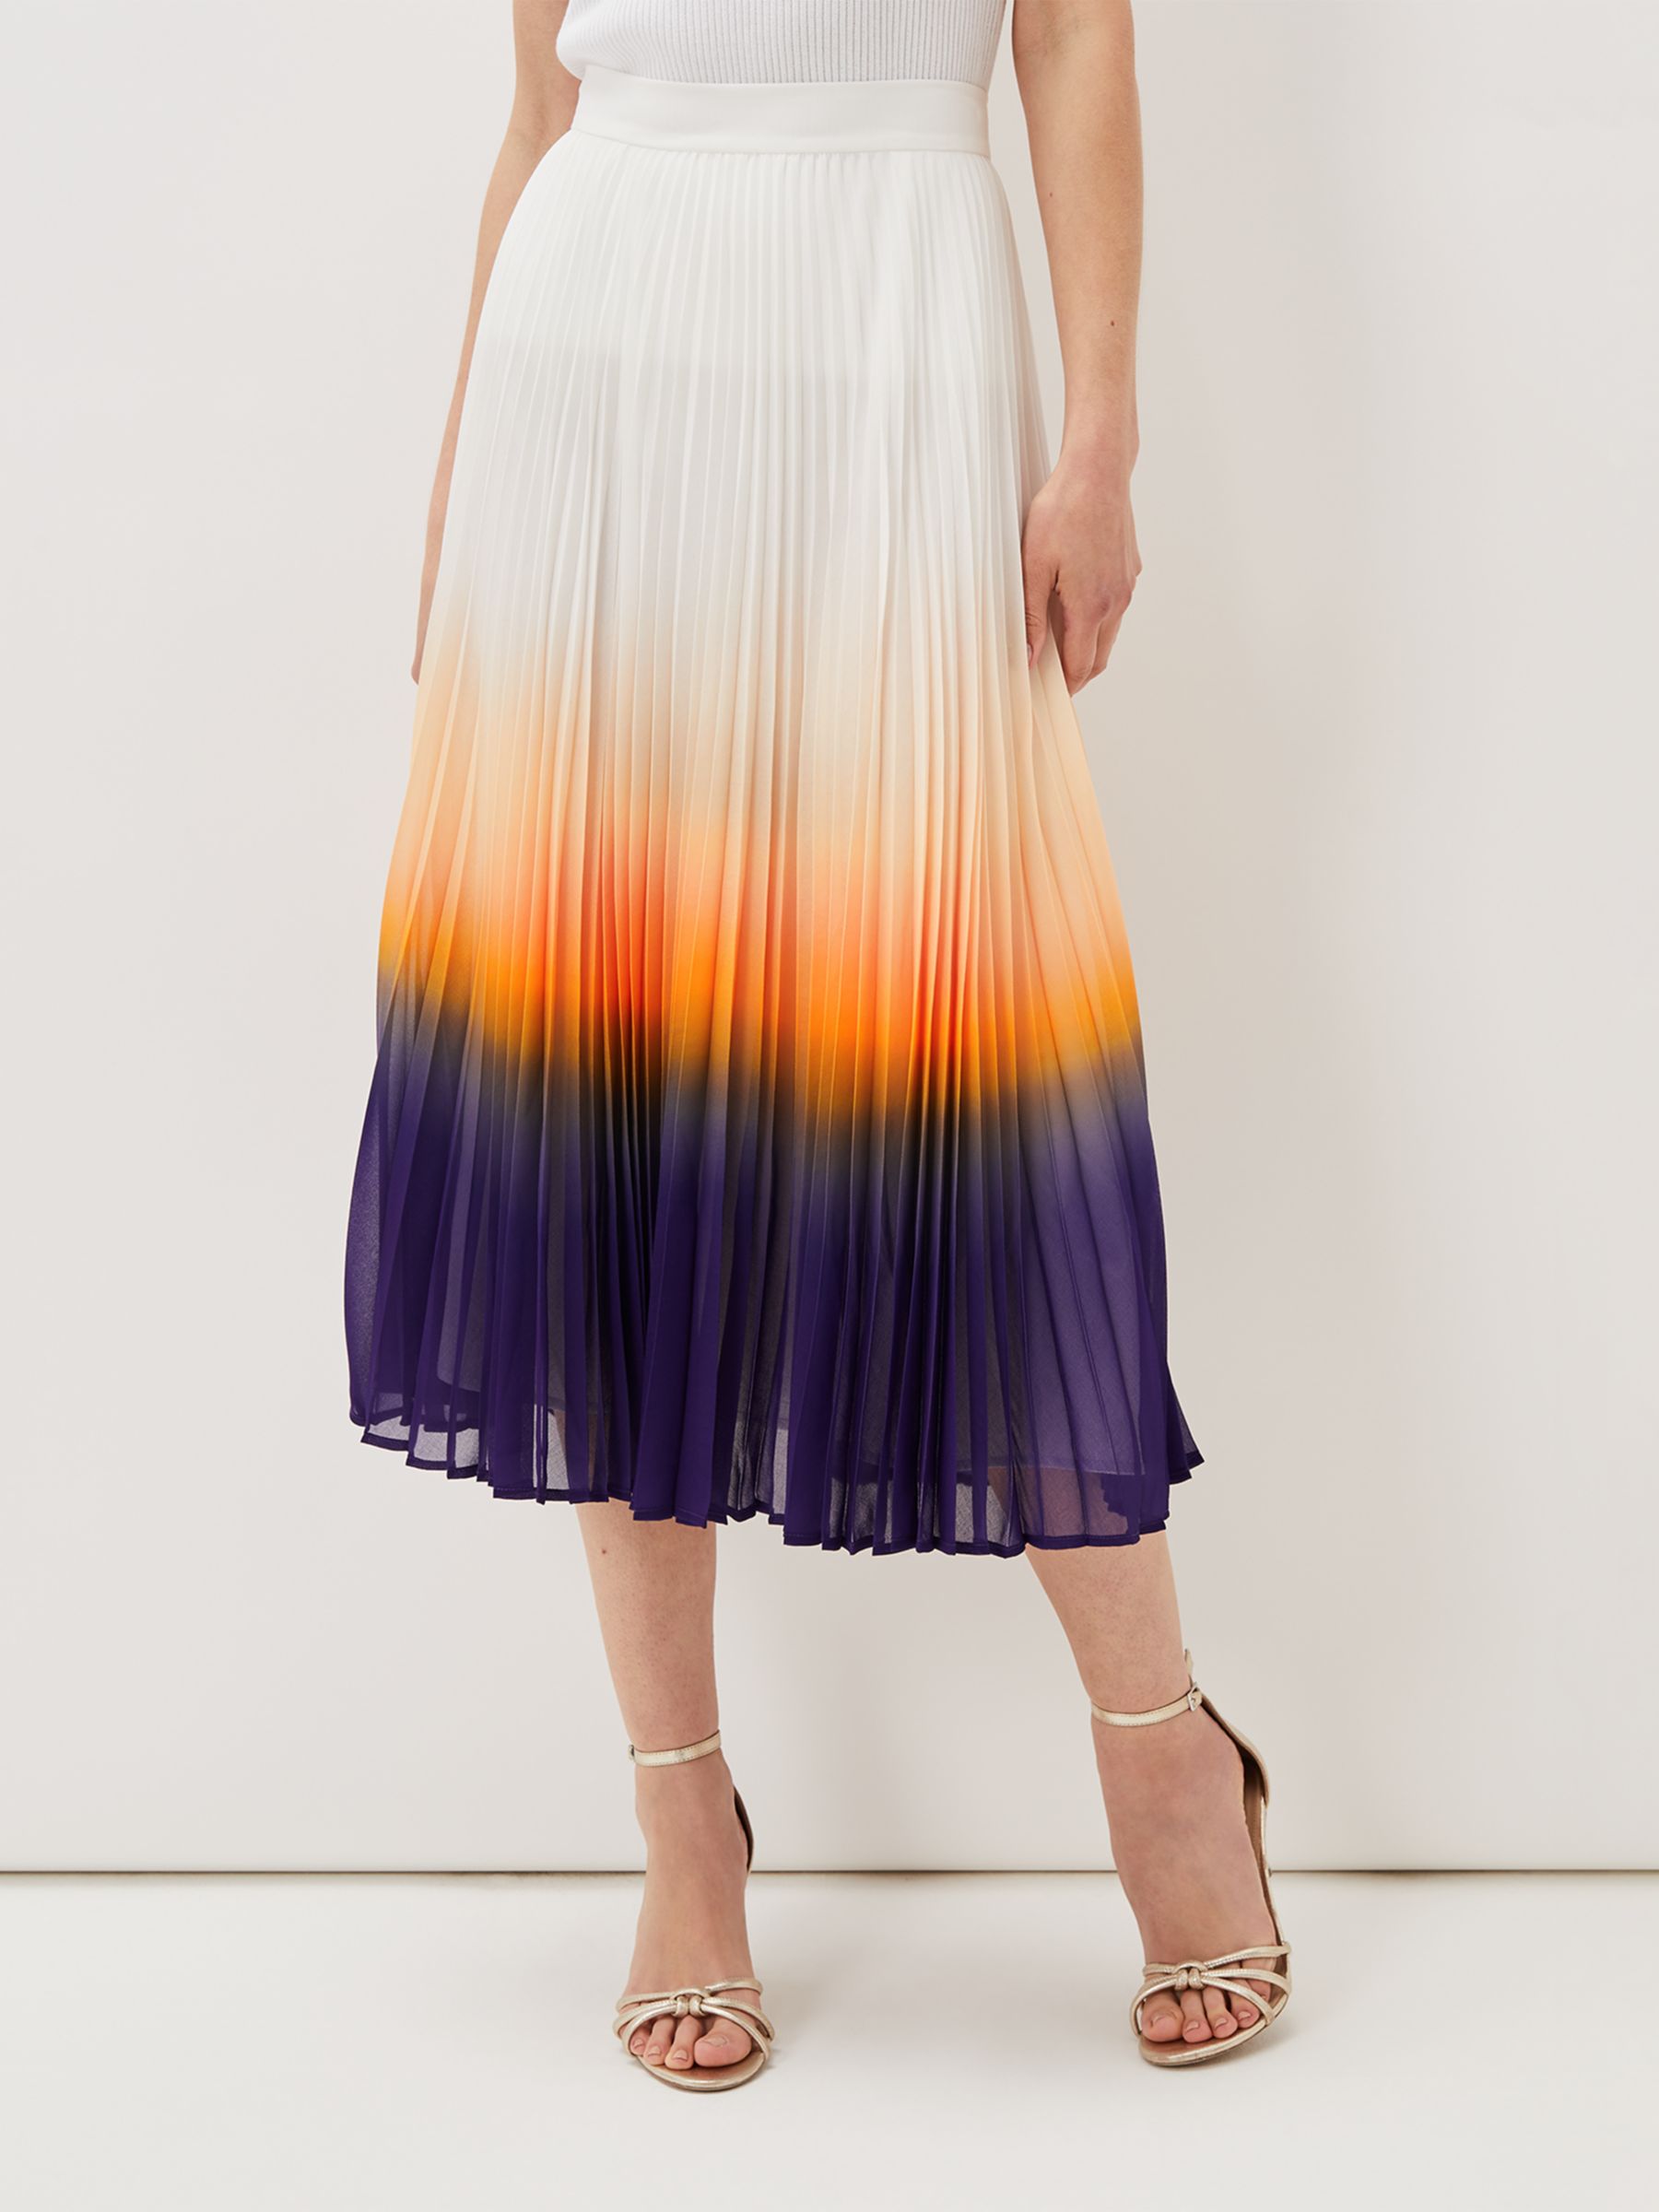 Phase Eight Raya Pleated Dip Dye Midi Skirt, Violet/Multi, 6